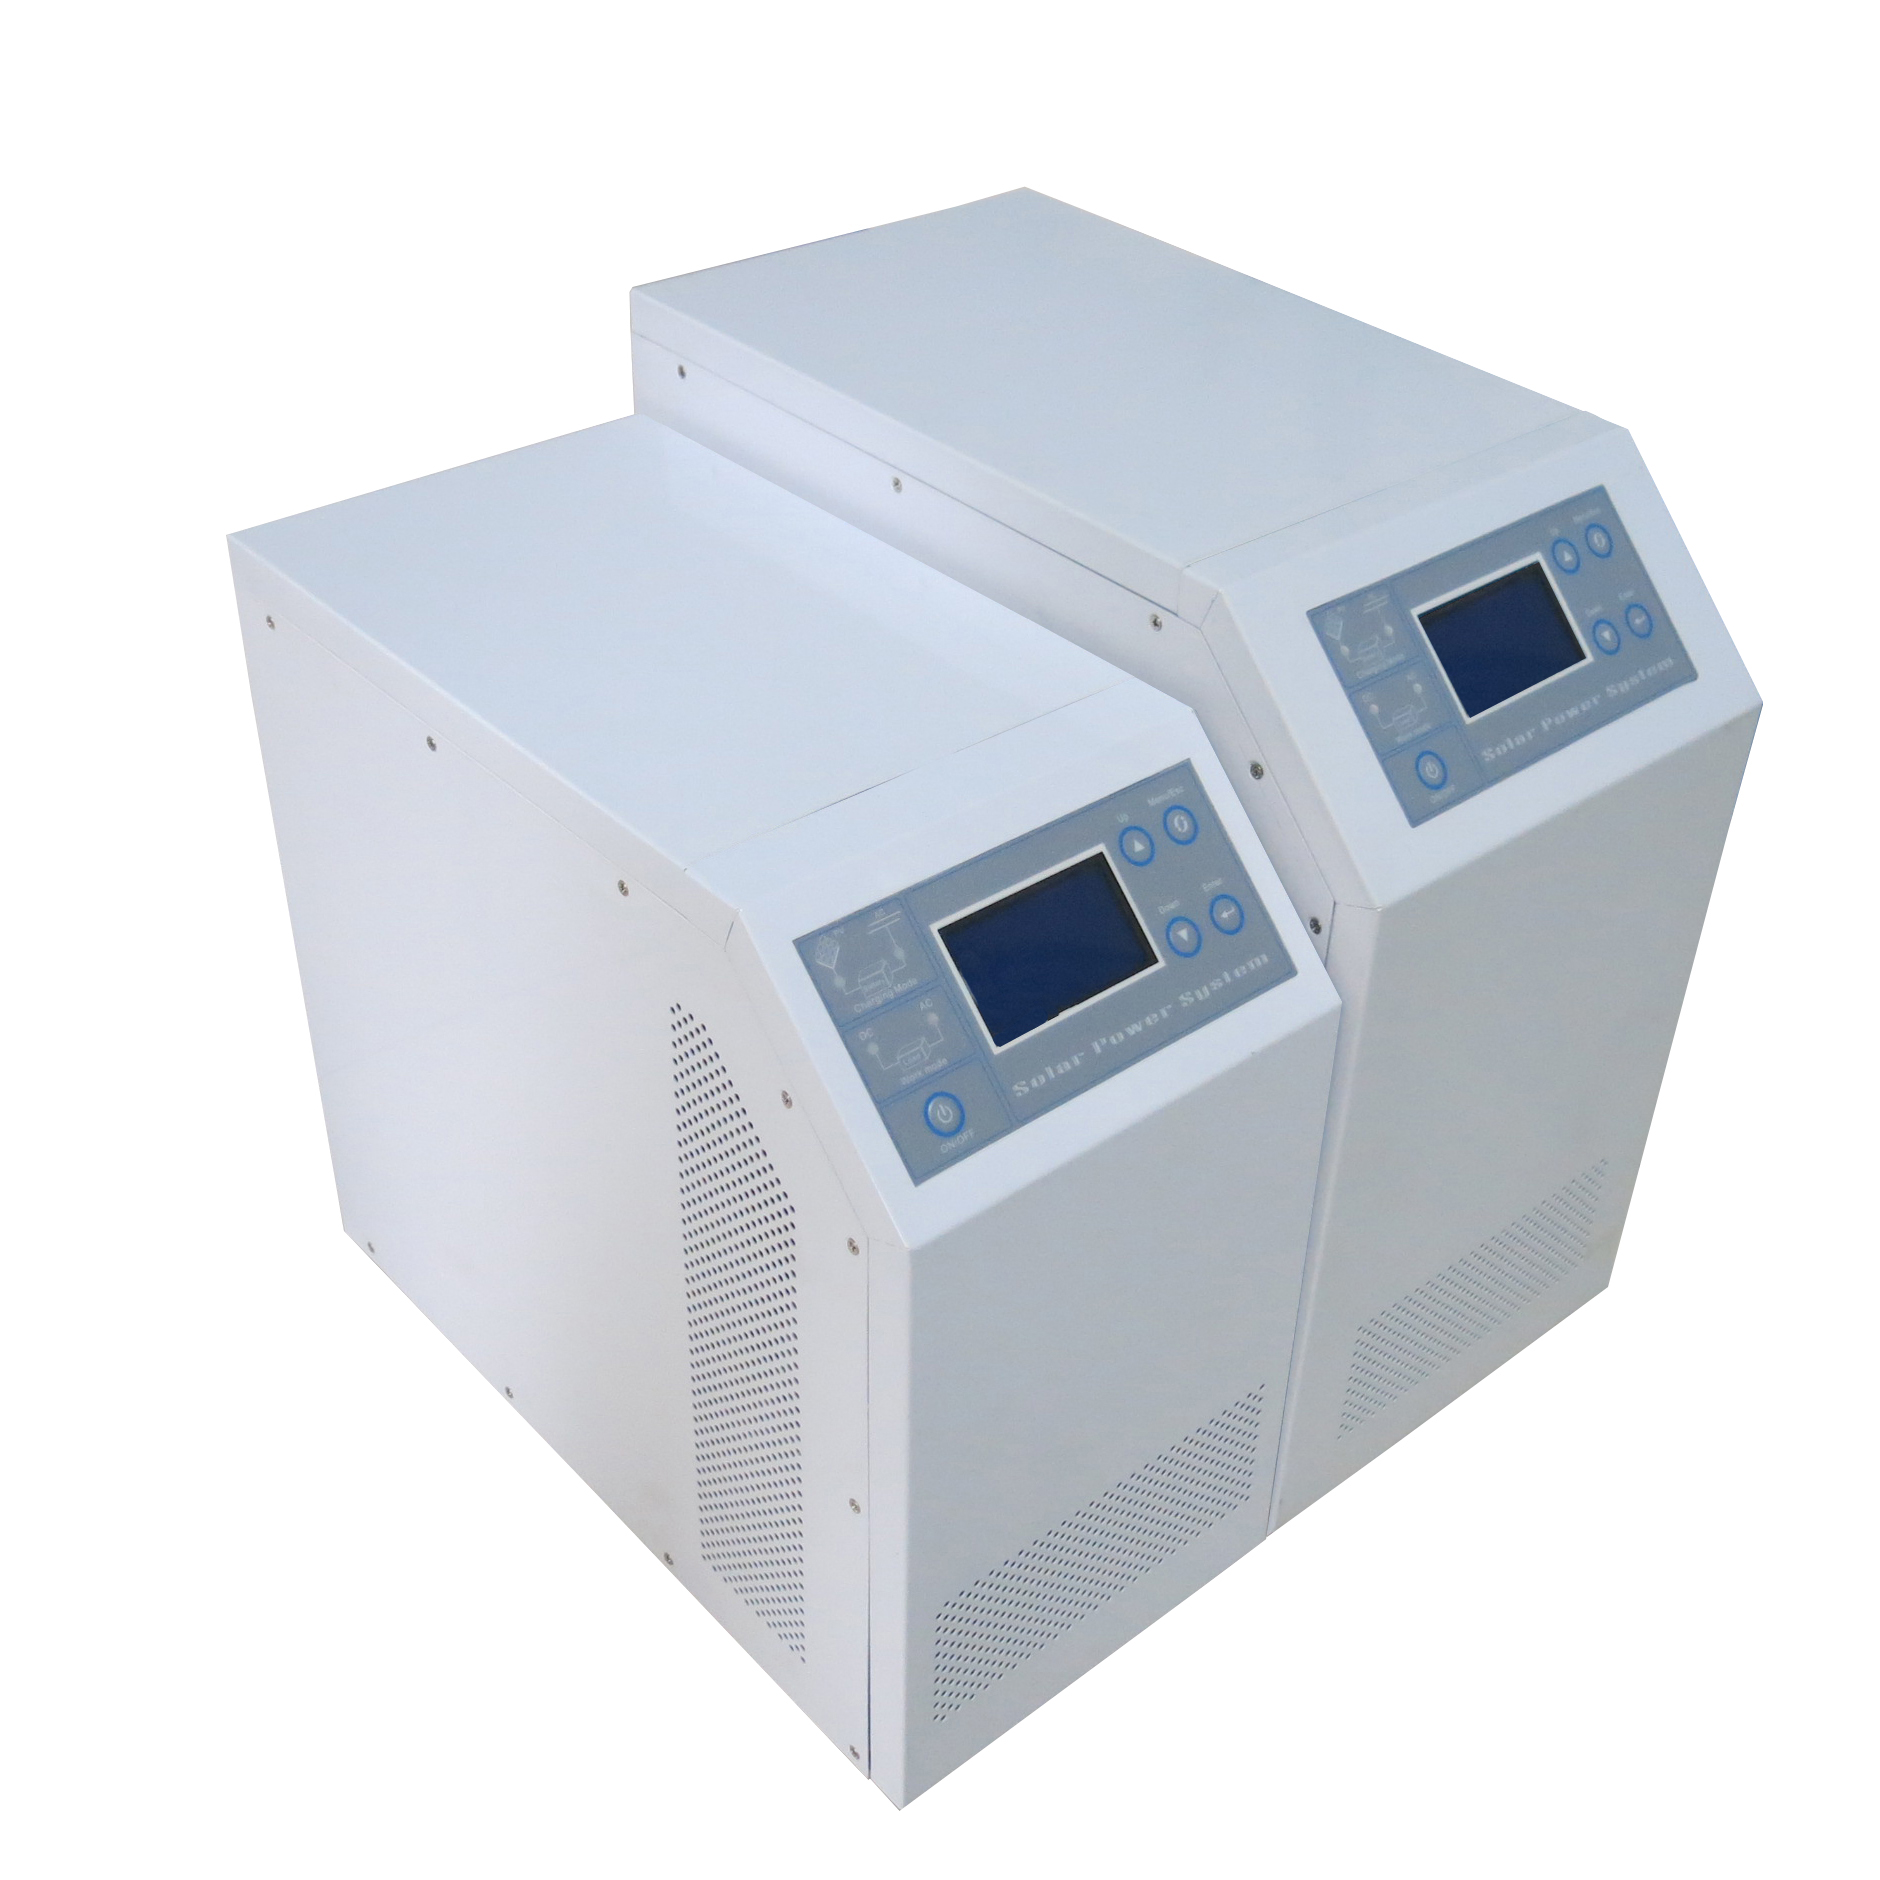 Die hohe Qualität Multifunktions reinen Sinus-Wechselrichter integrierten MPPT Solarregler I-Panda HPC 1000W